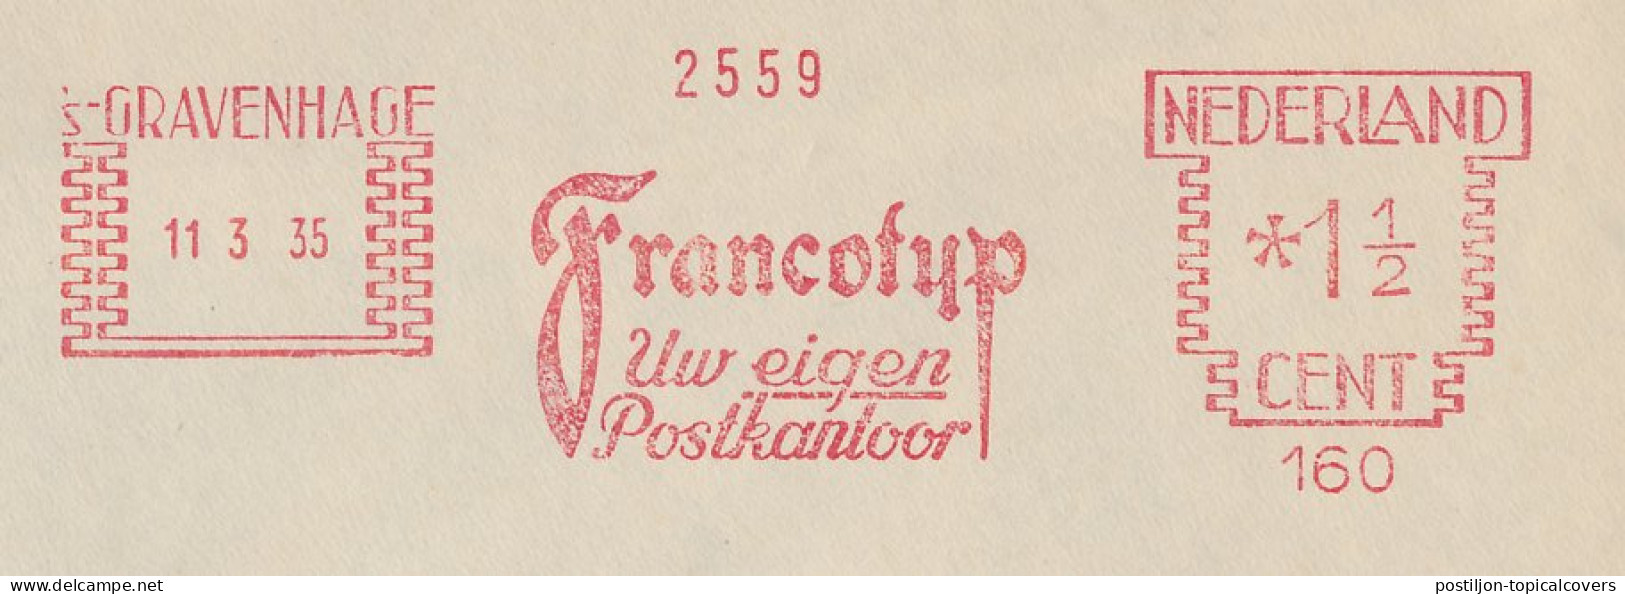 Meter Cover Netherlands 1935 Francotyp - The Hague - Viñetas De Franqueo [ATM]